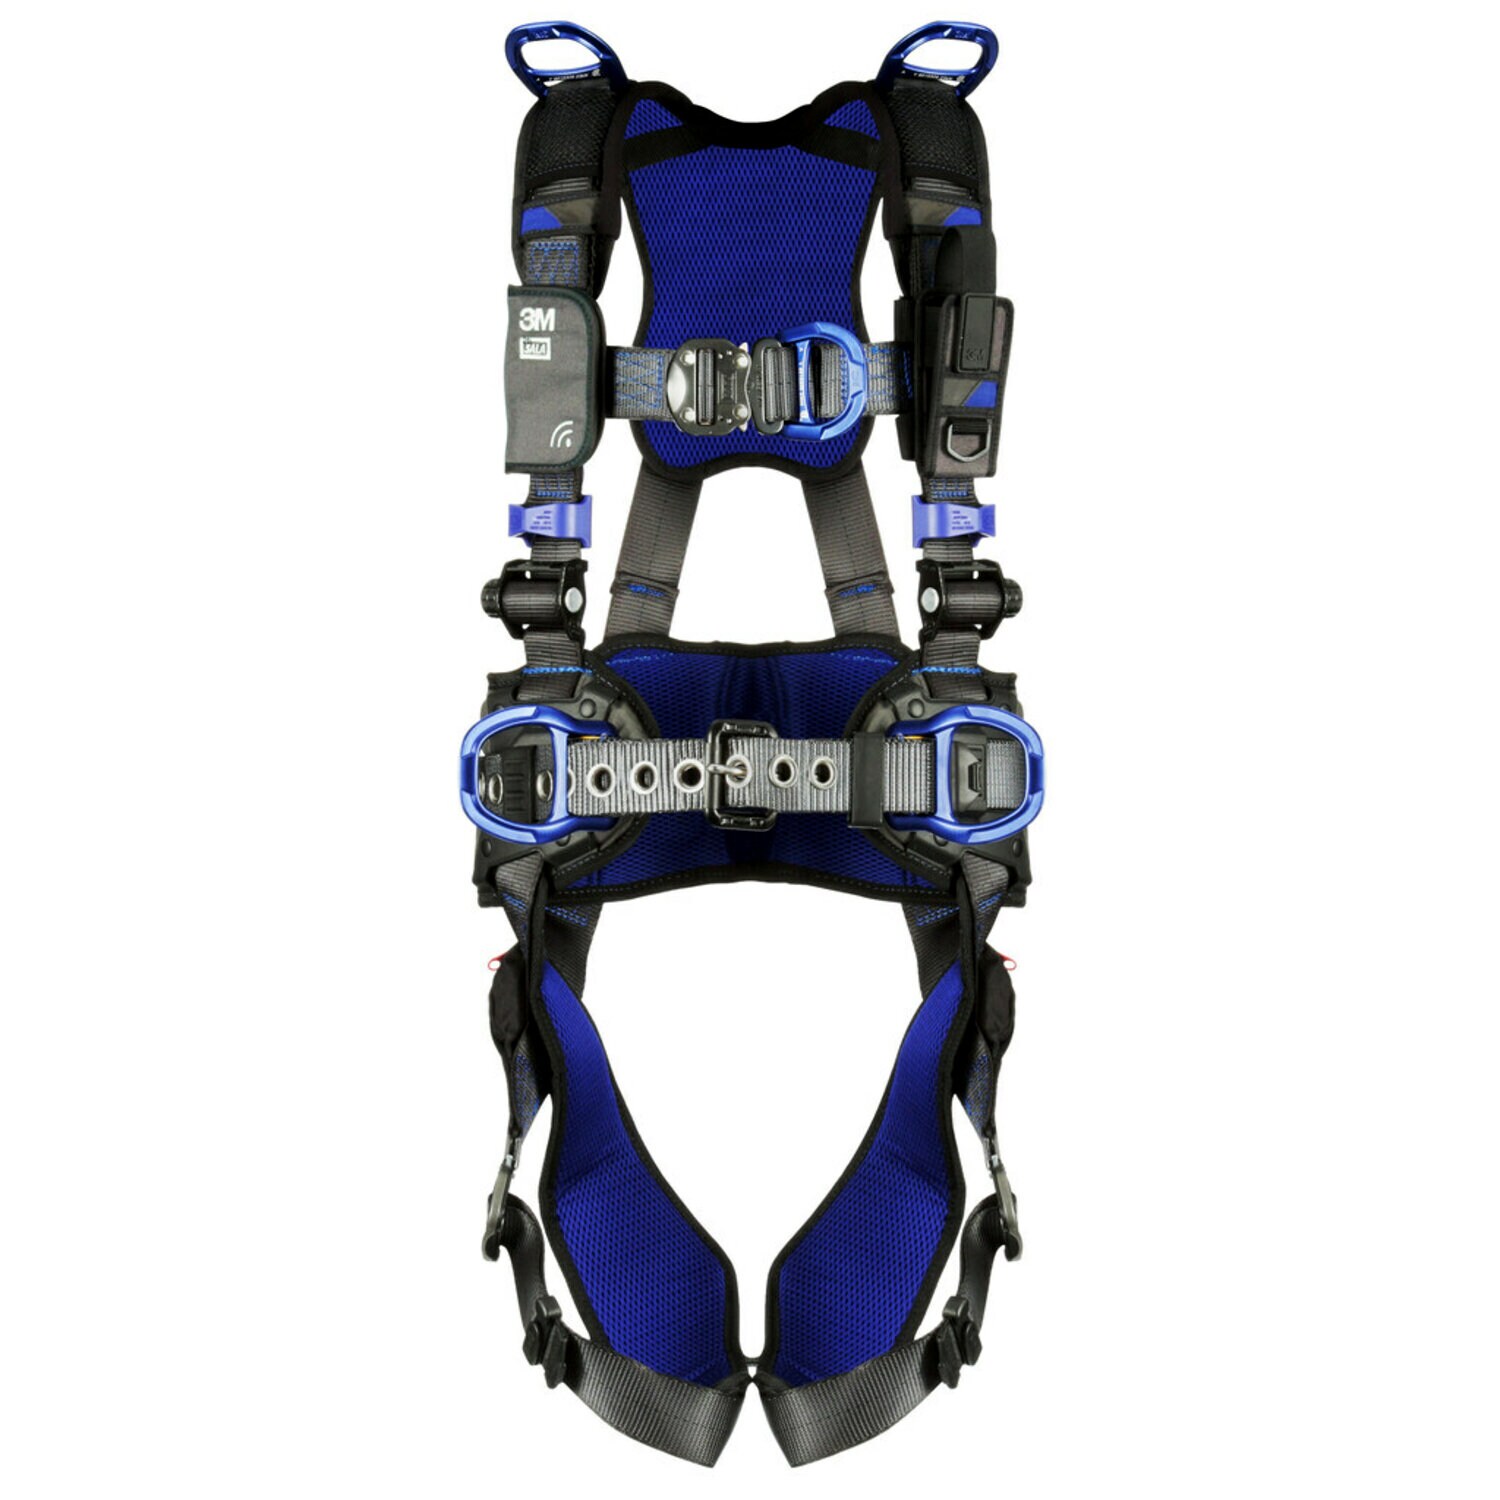 7012816403 - 3M DBI-SALA ExoFit NEX X300 Comfort Construction Climbing/Positioning/Retrieval Safety Harness with Mesh Shoulders 1113708, 2X